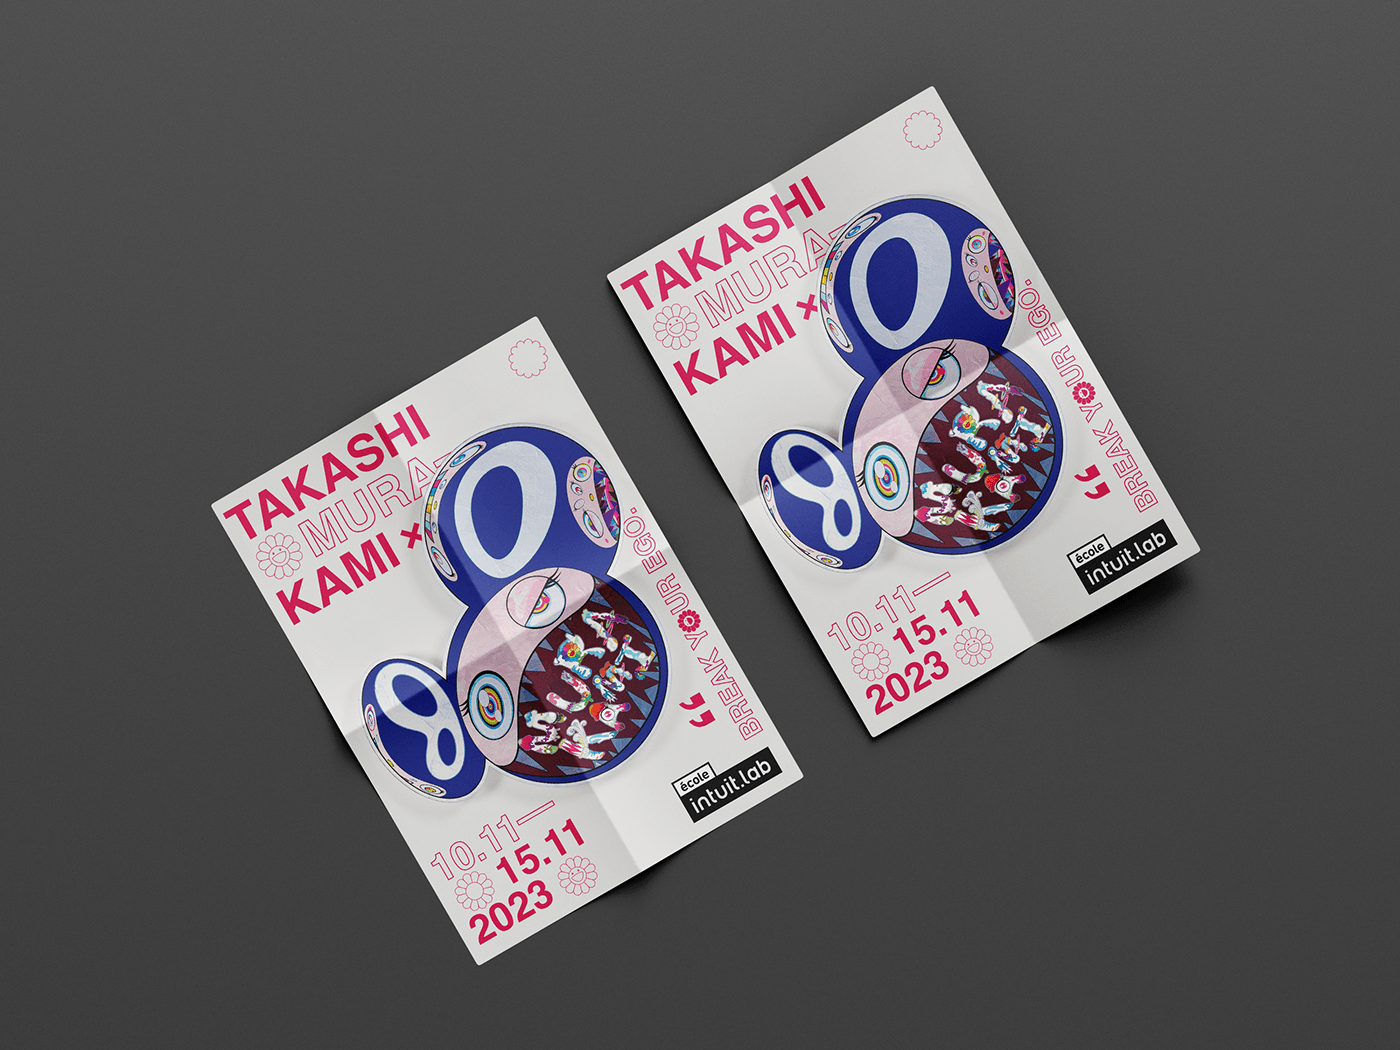 Murakami Kanye West typography   graphic design  poster Poster Design japan ILLUSTRATION  fine art Takashi Murakami